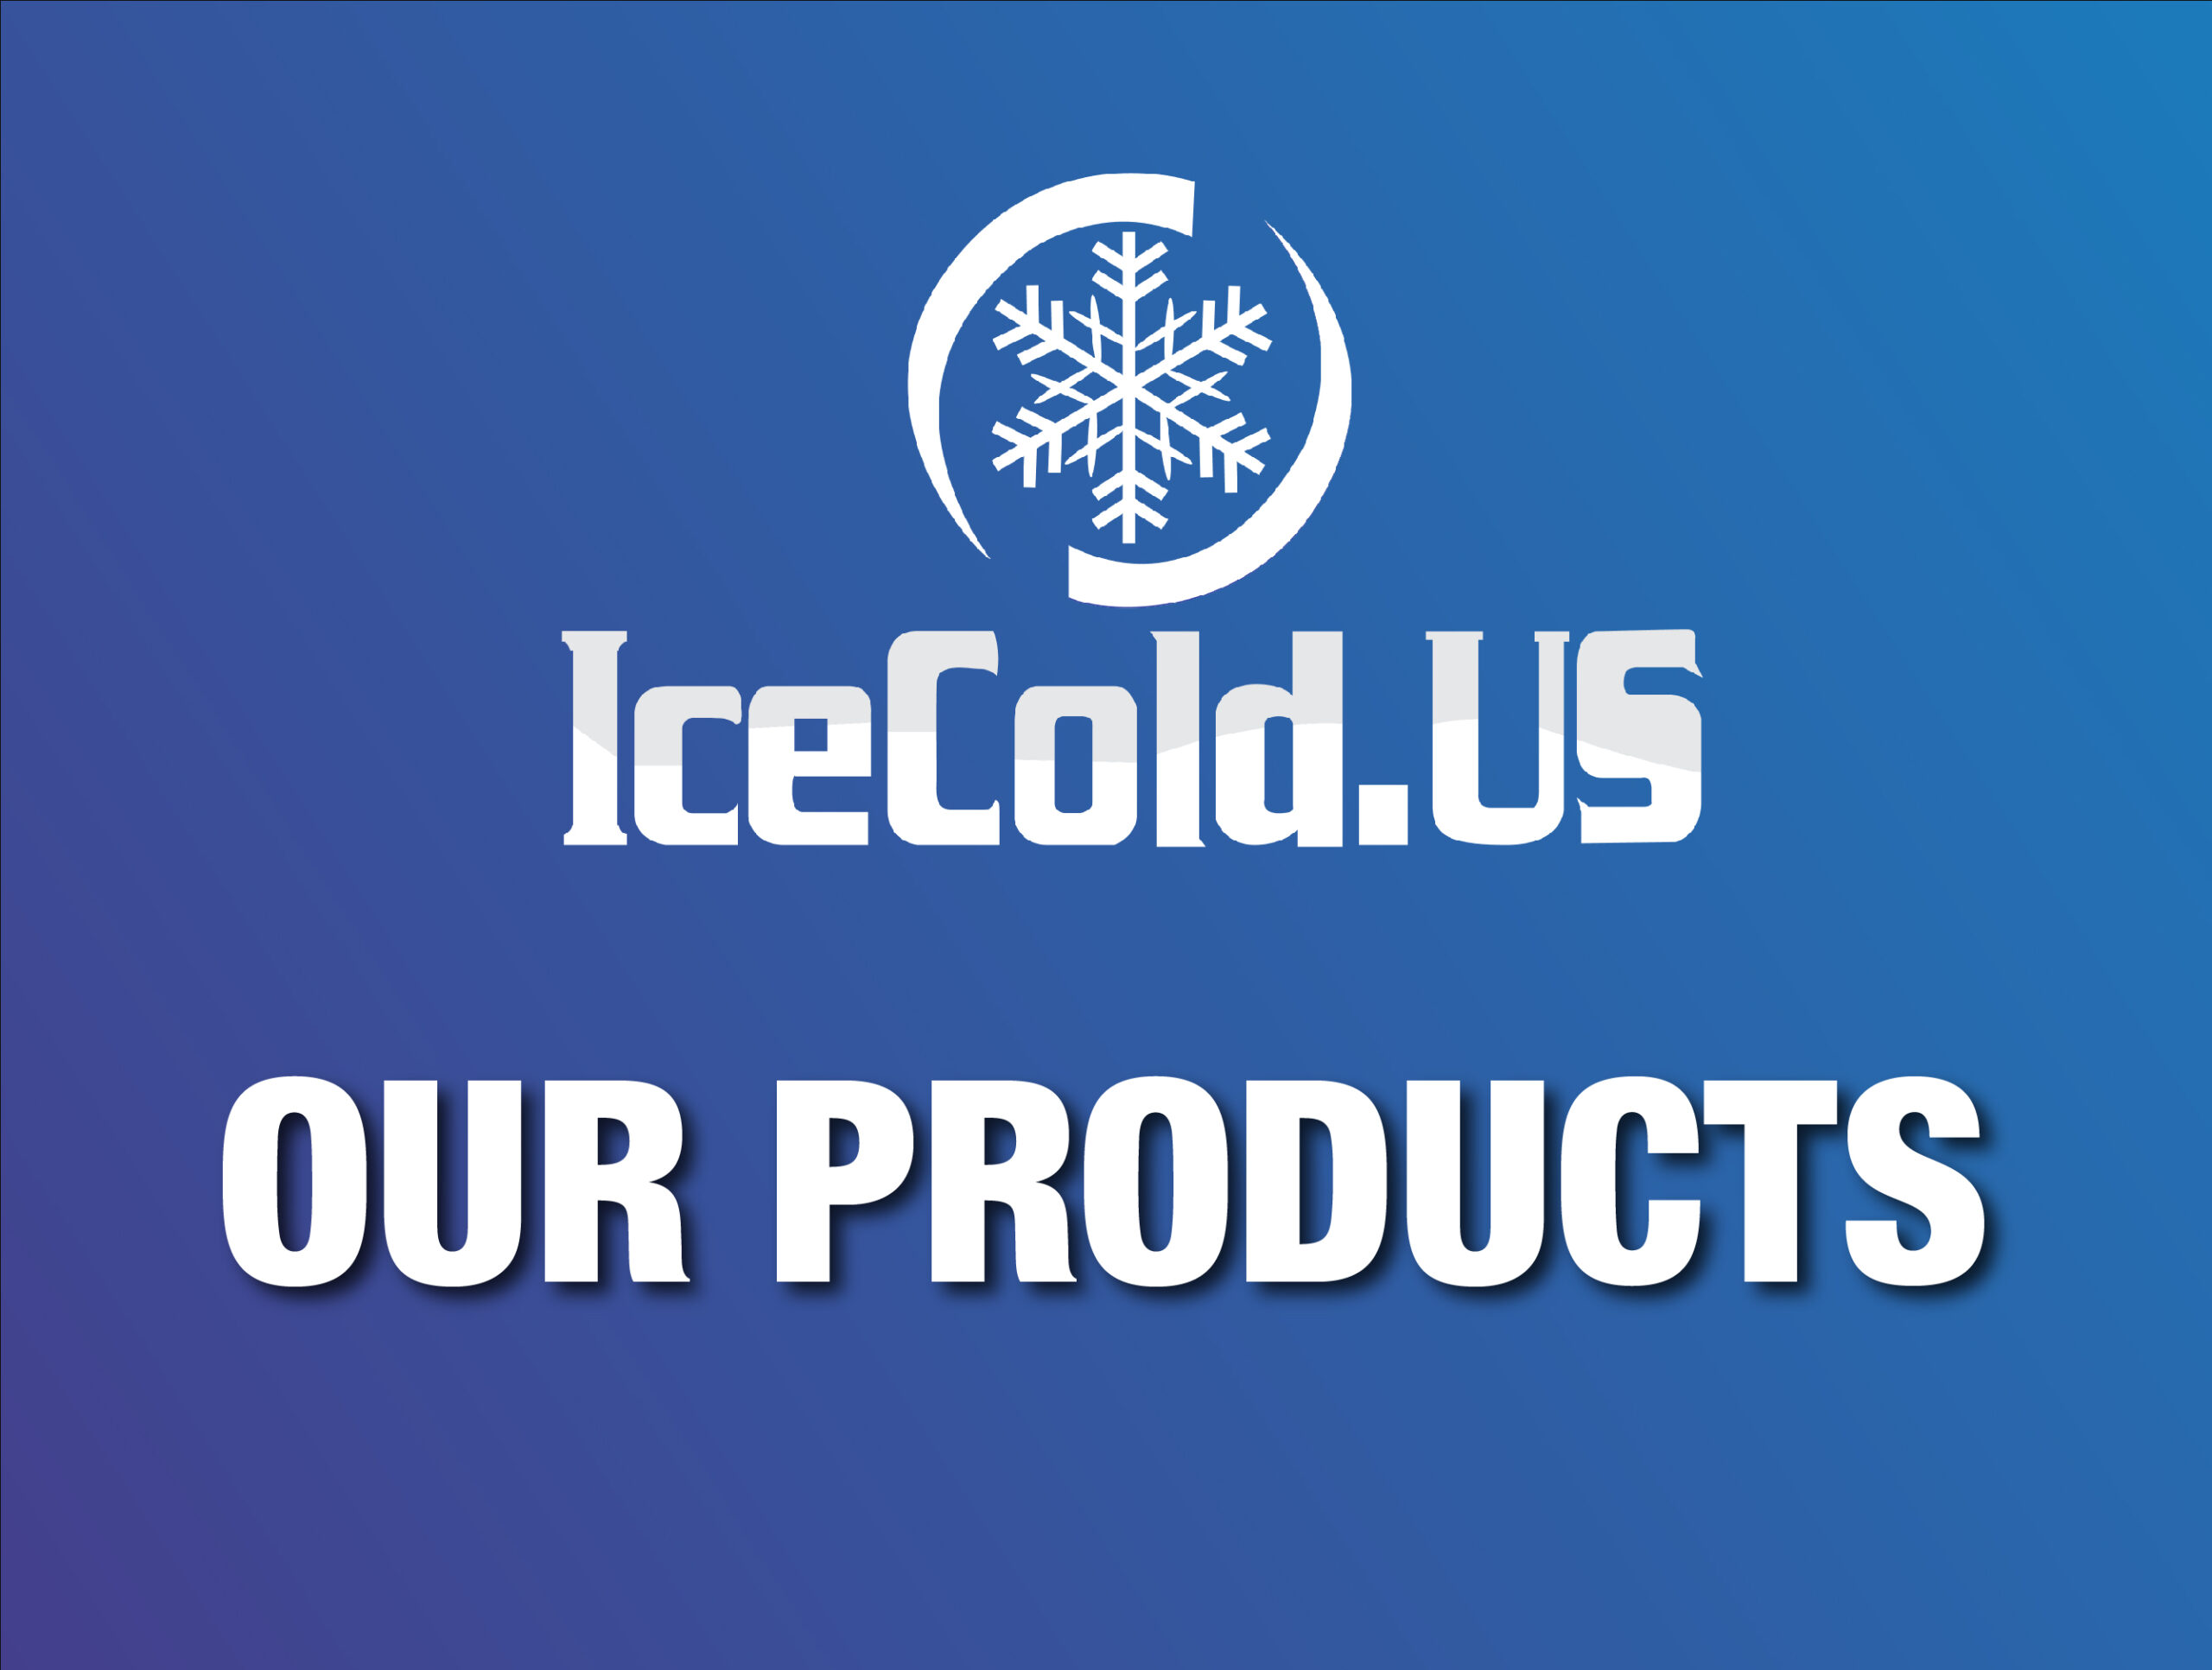 IceCold.us Refrigerants